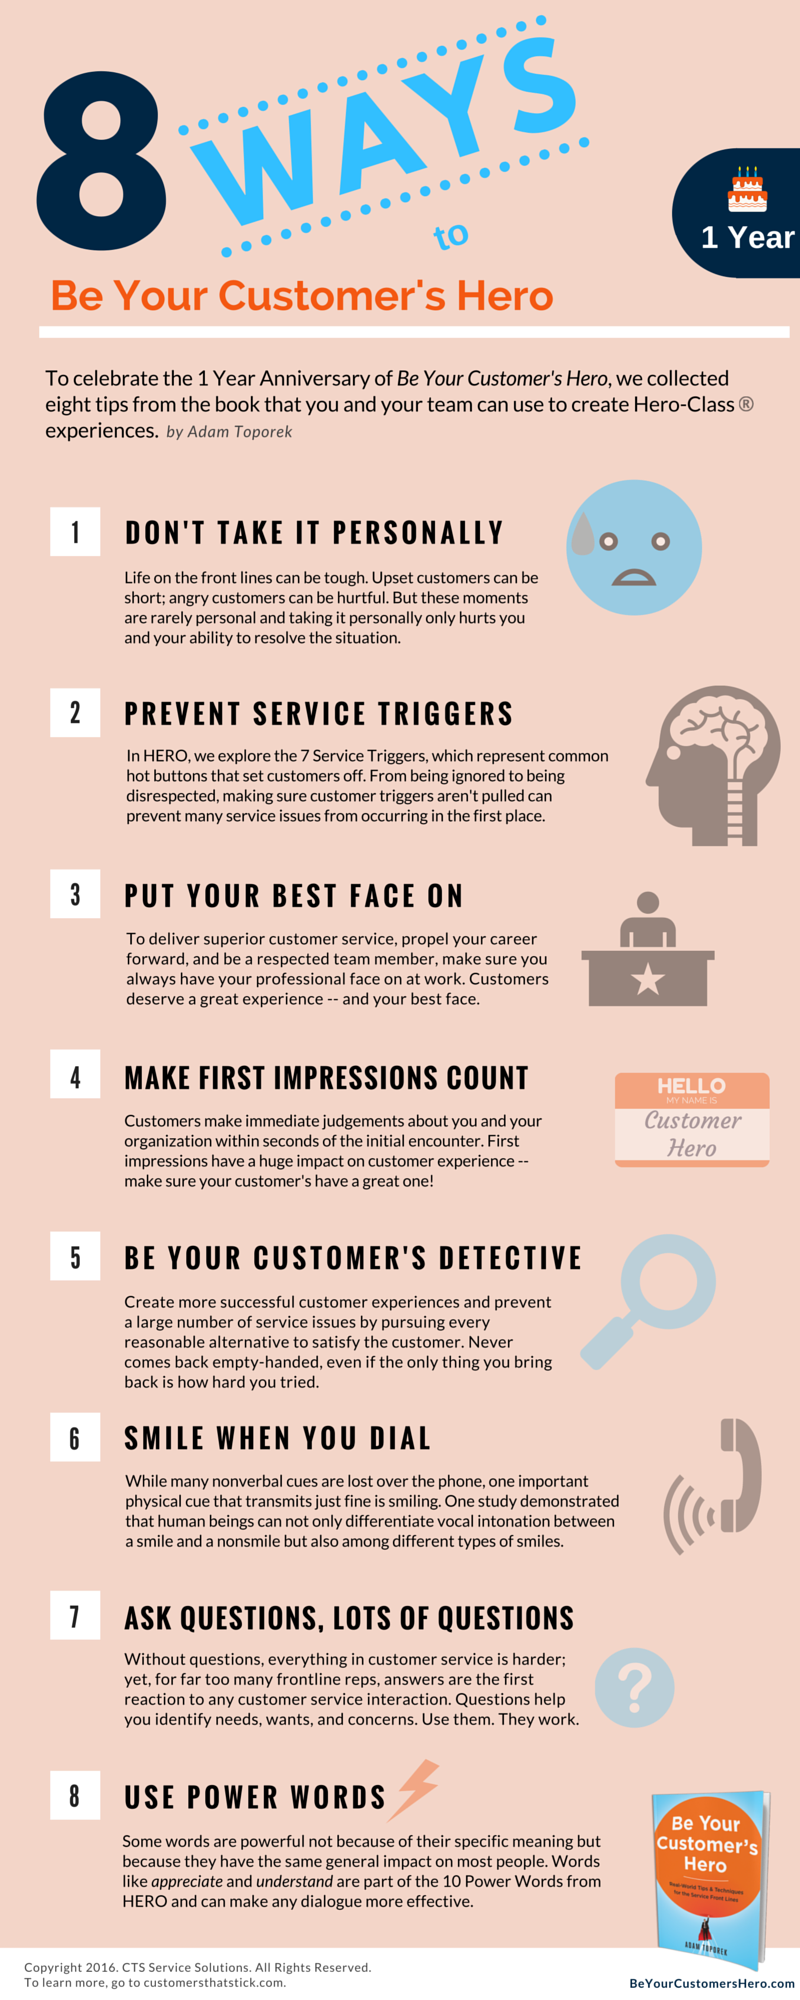 Customer Service Infographic: 8 Ways to Be Your Customer's Hero